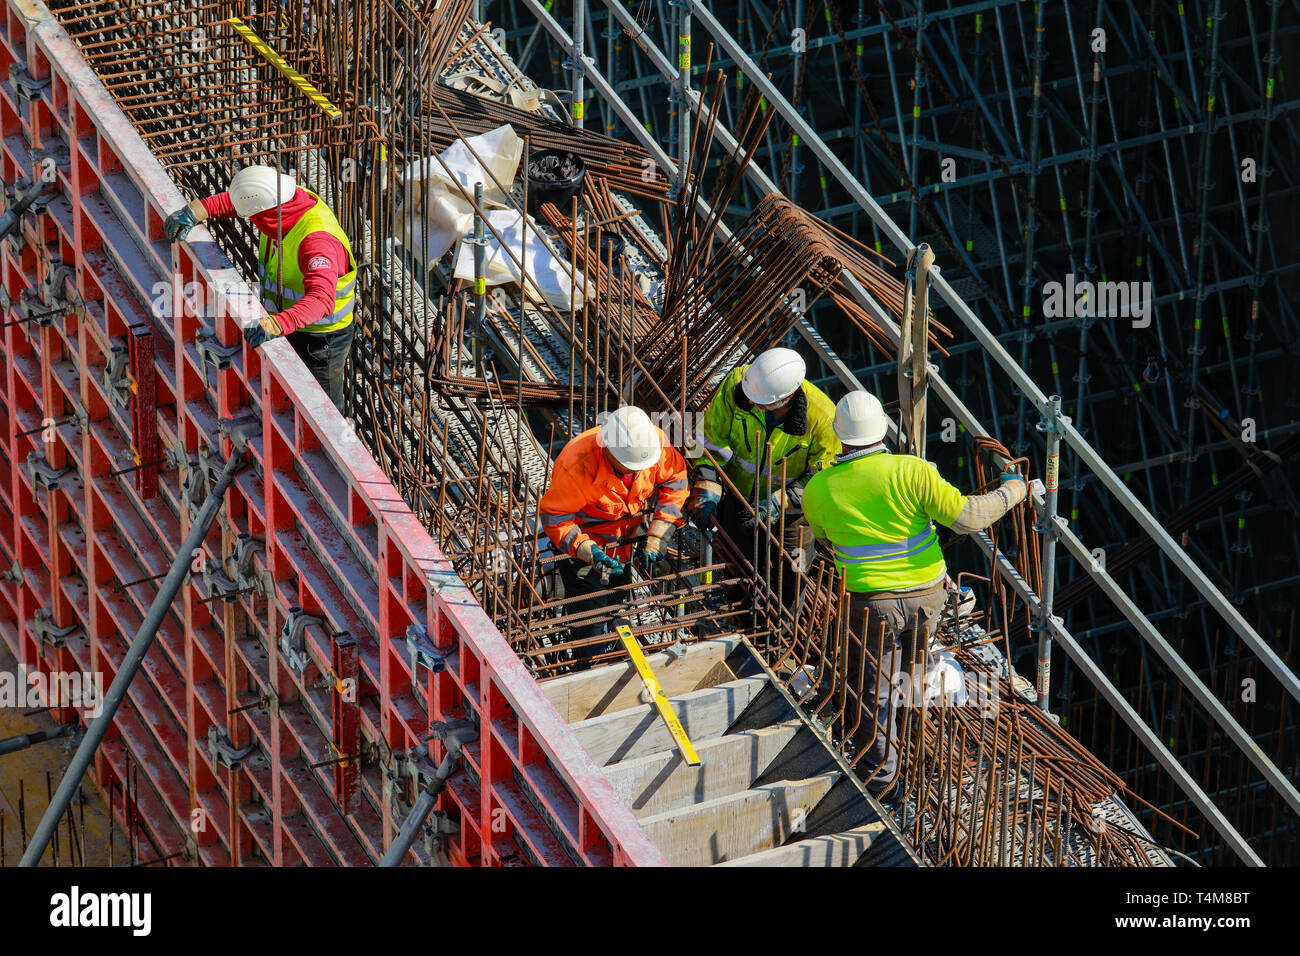 Alemania - Industria de la construcción, obreros de la construcción trabajar en un sitio de construcción. Deutschland - Bauwirtschaft, Bauarbeiter arbeiten auf einer Baustel Foto de stock